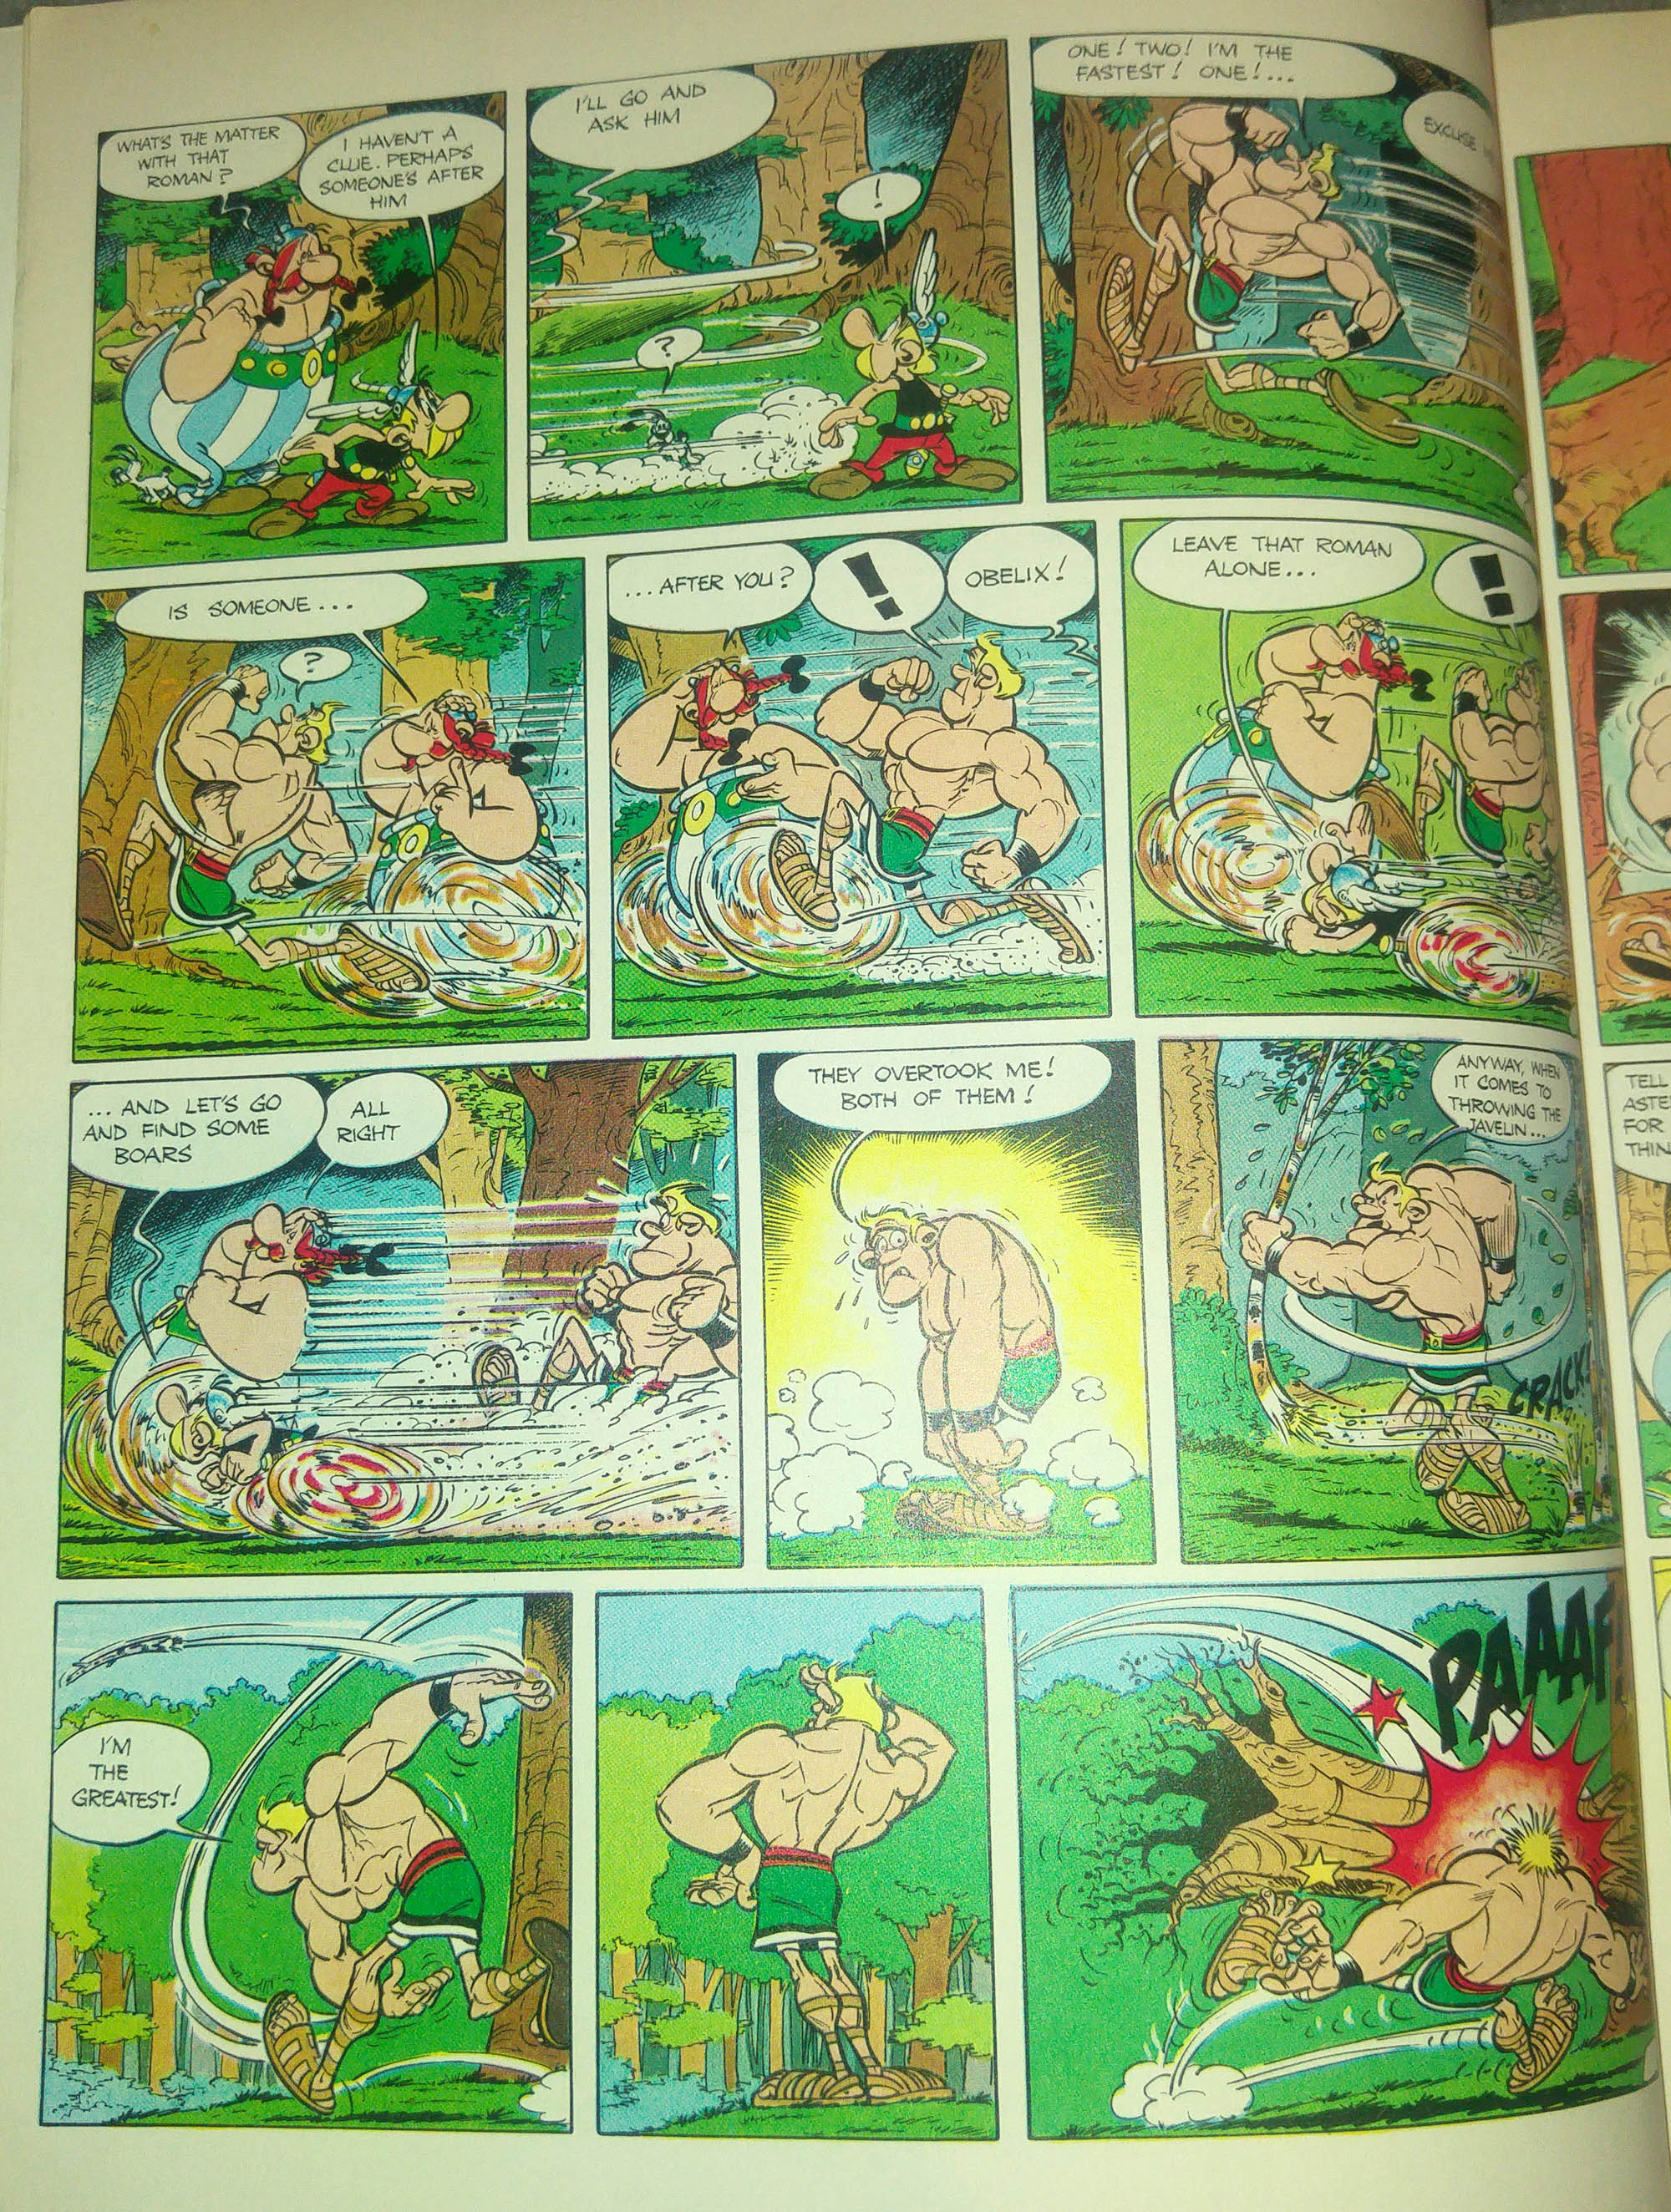 AsterixPage2